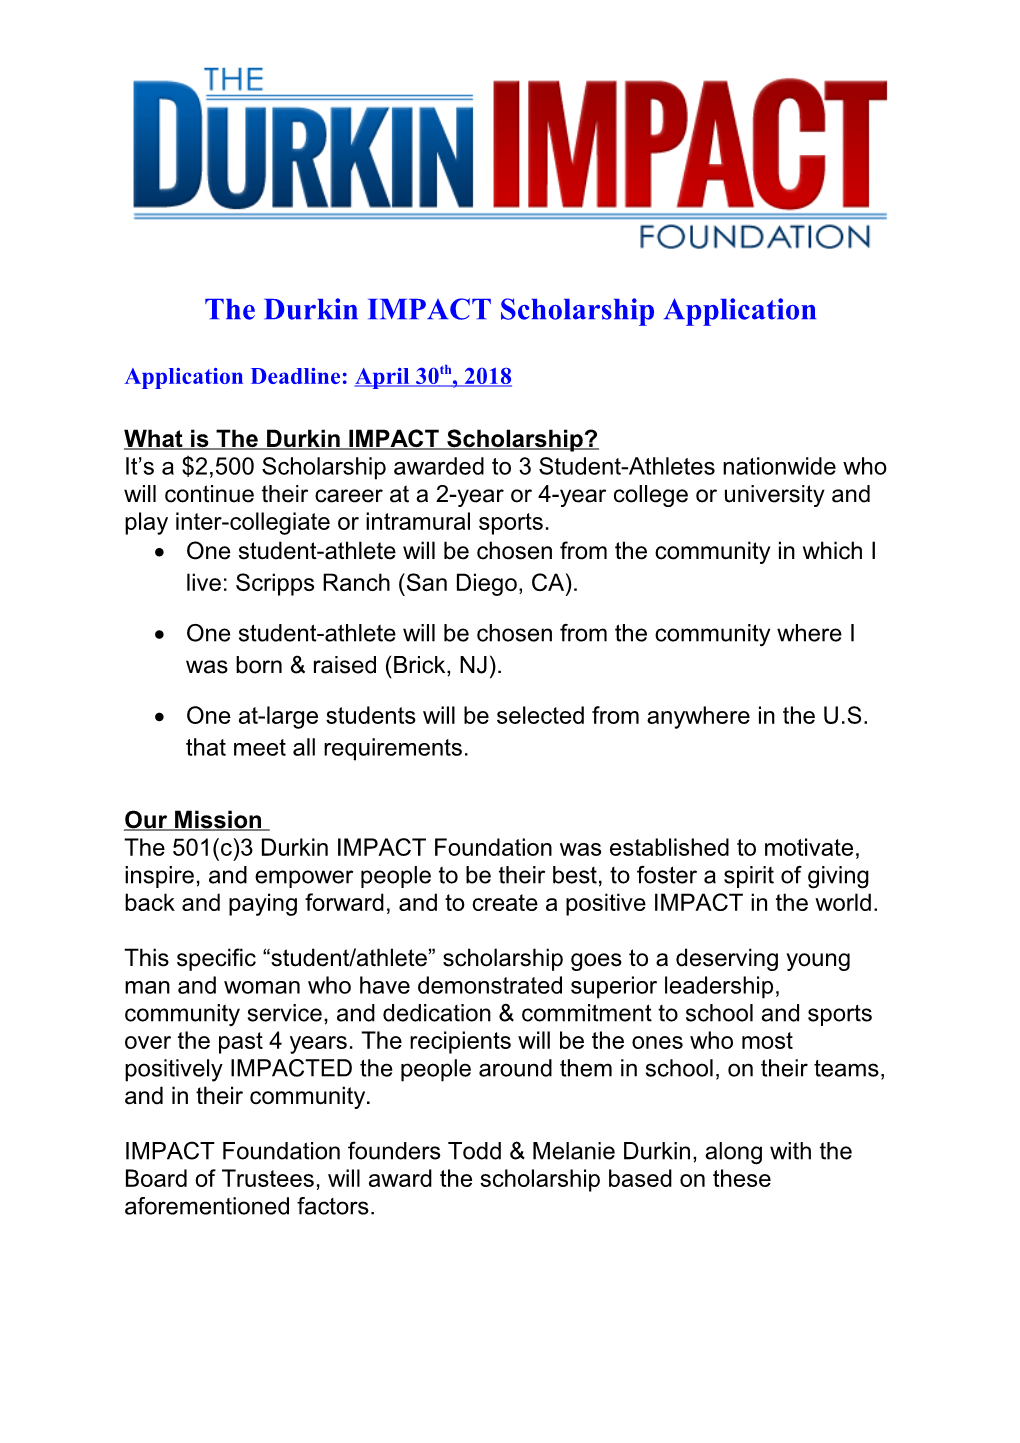 Durkin IMPACT Foundation Application